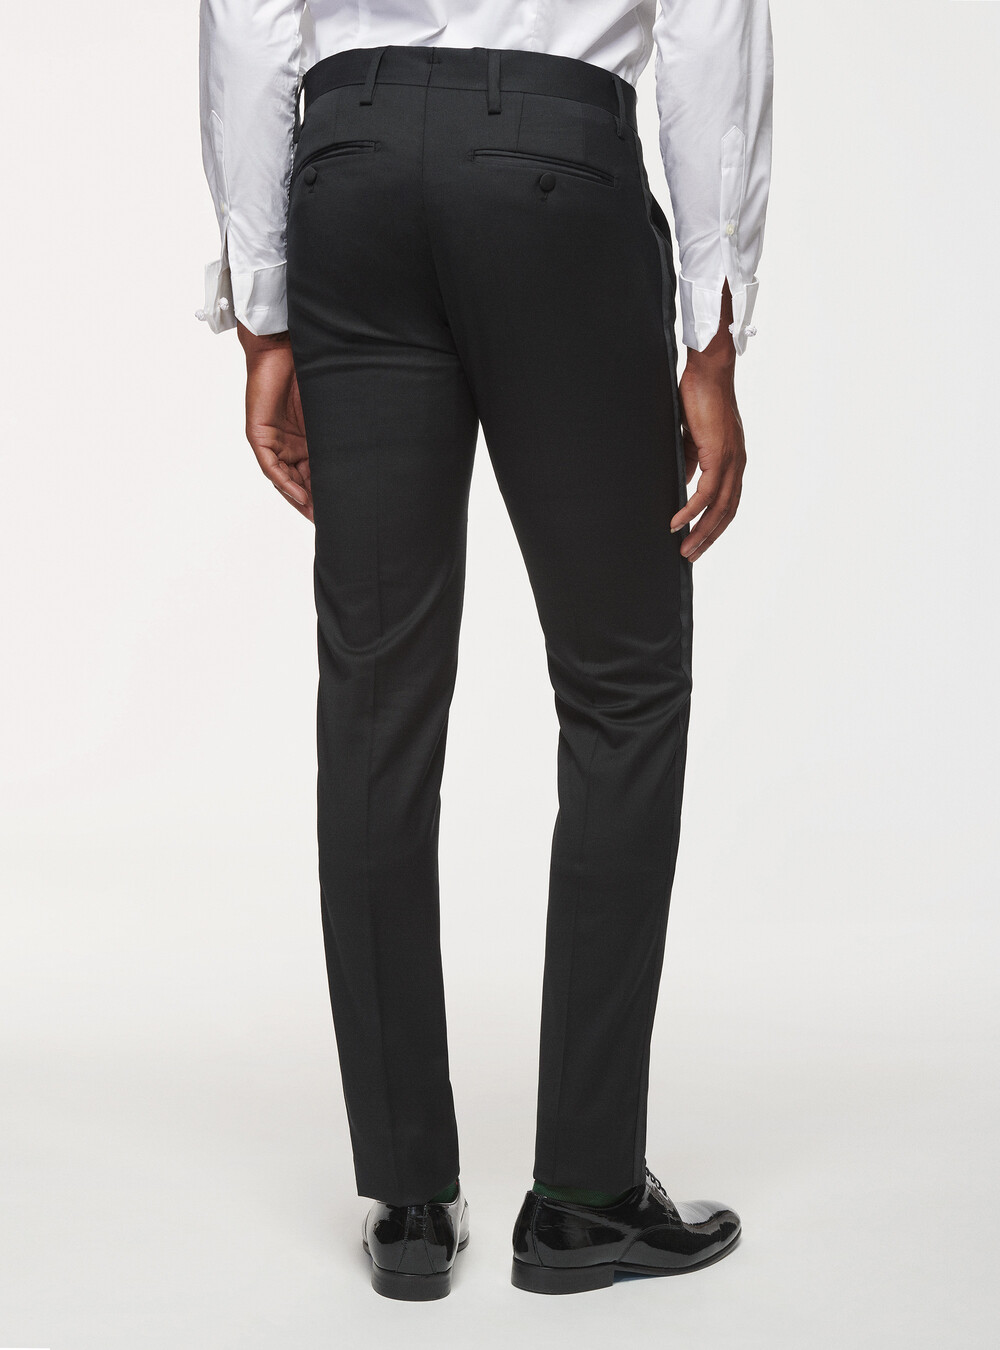 Men's New Slim Fit Black Tuxedo Pants